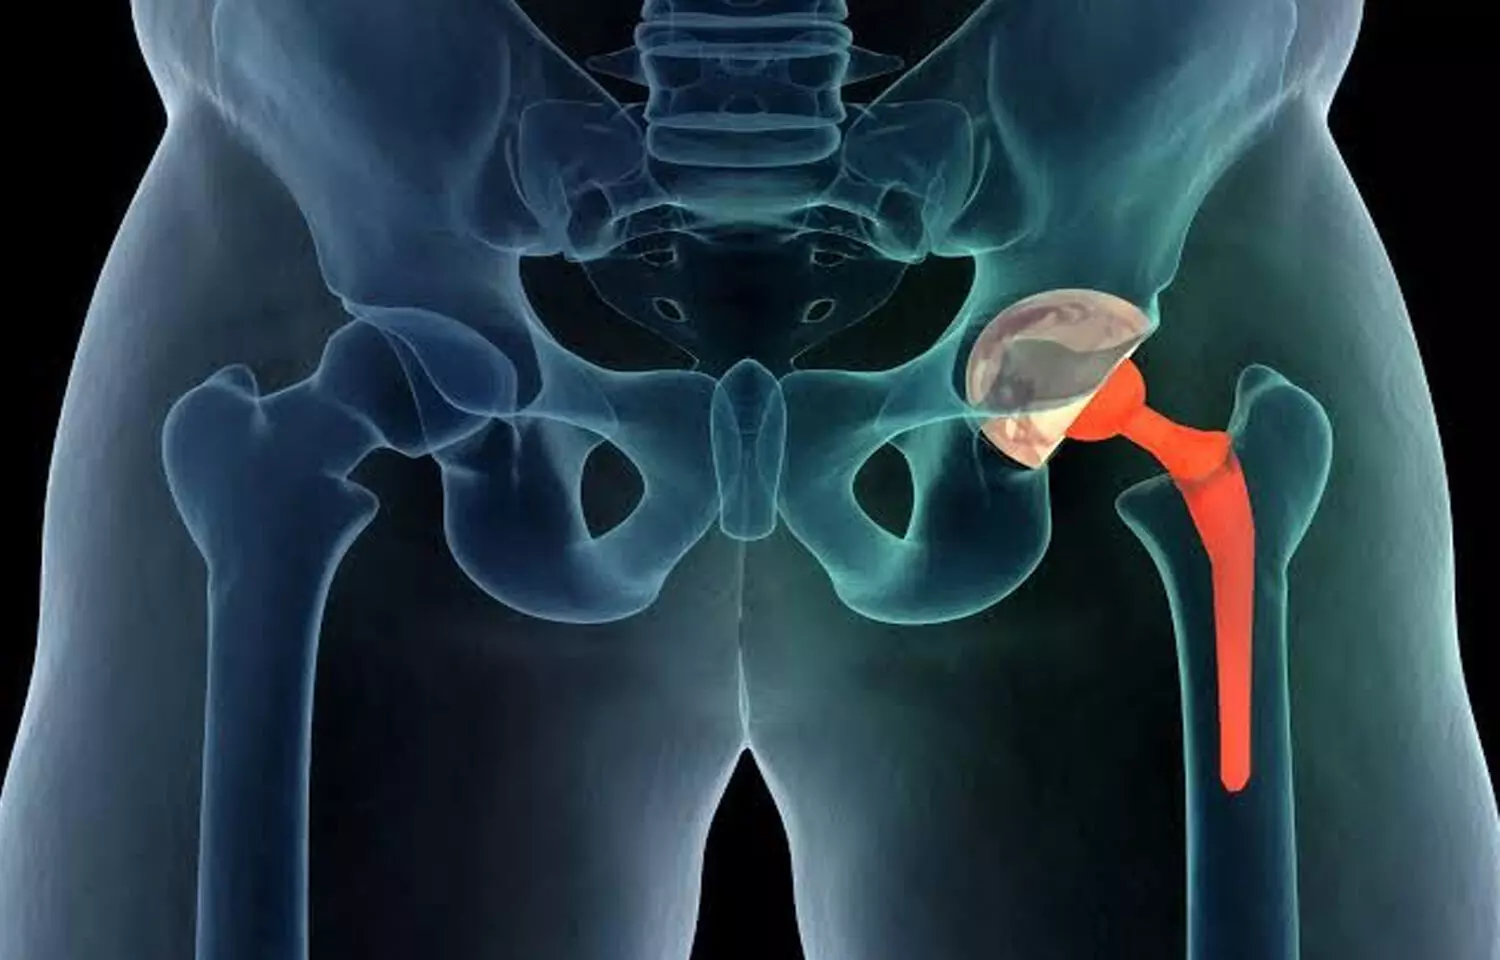 No benefit of quadratus lumborum block addition for managing pain after hip surgery: Study